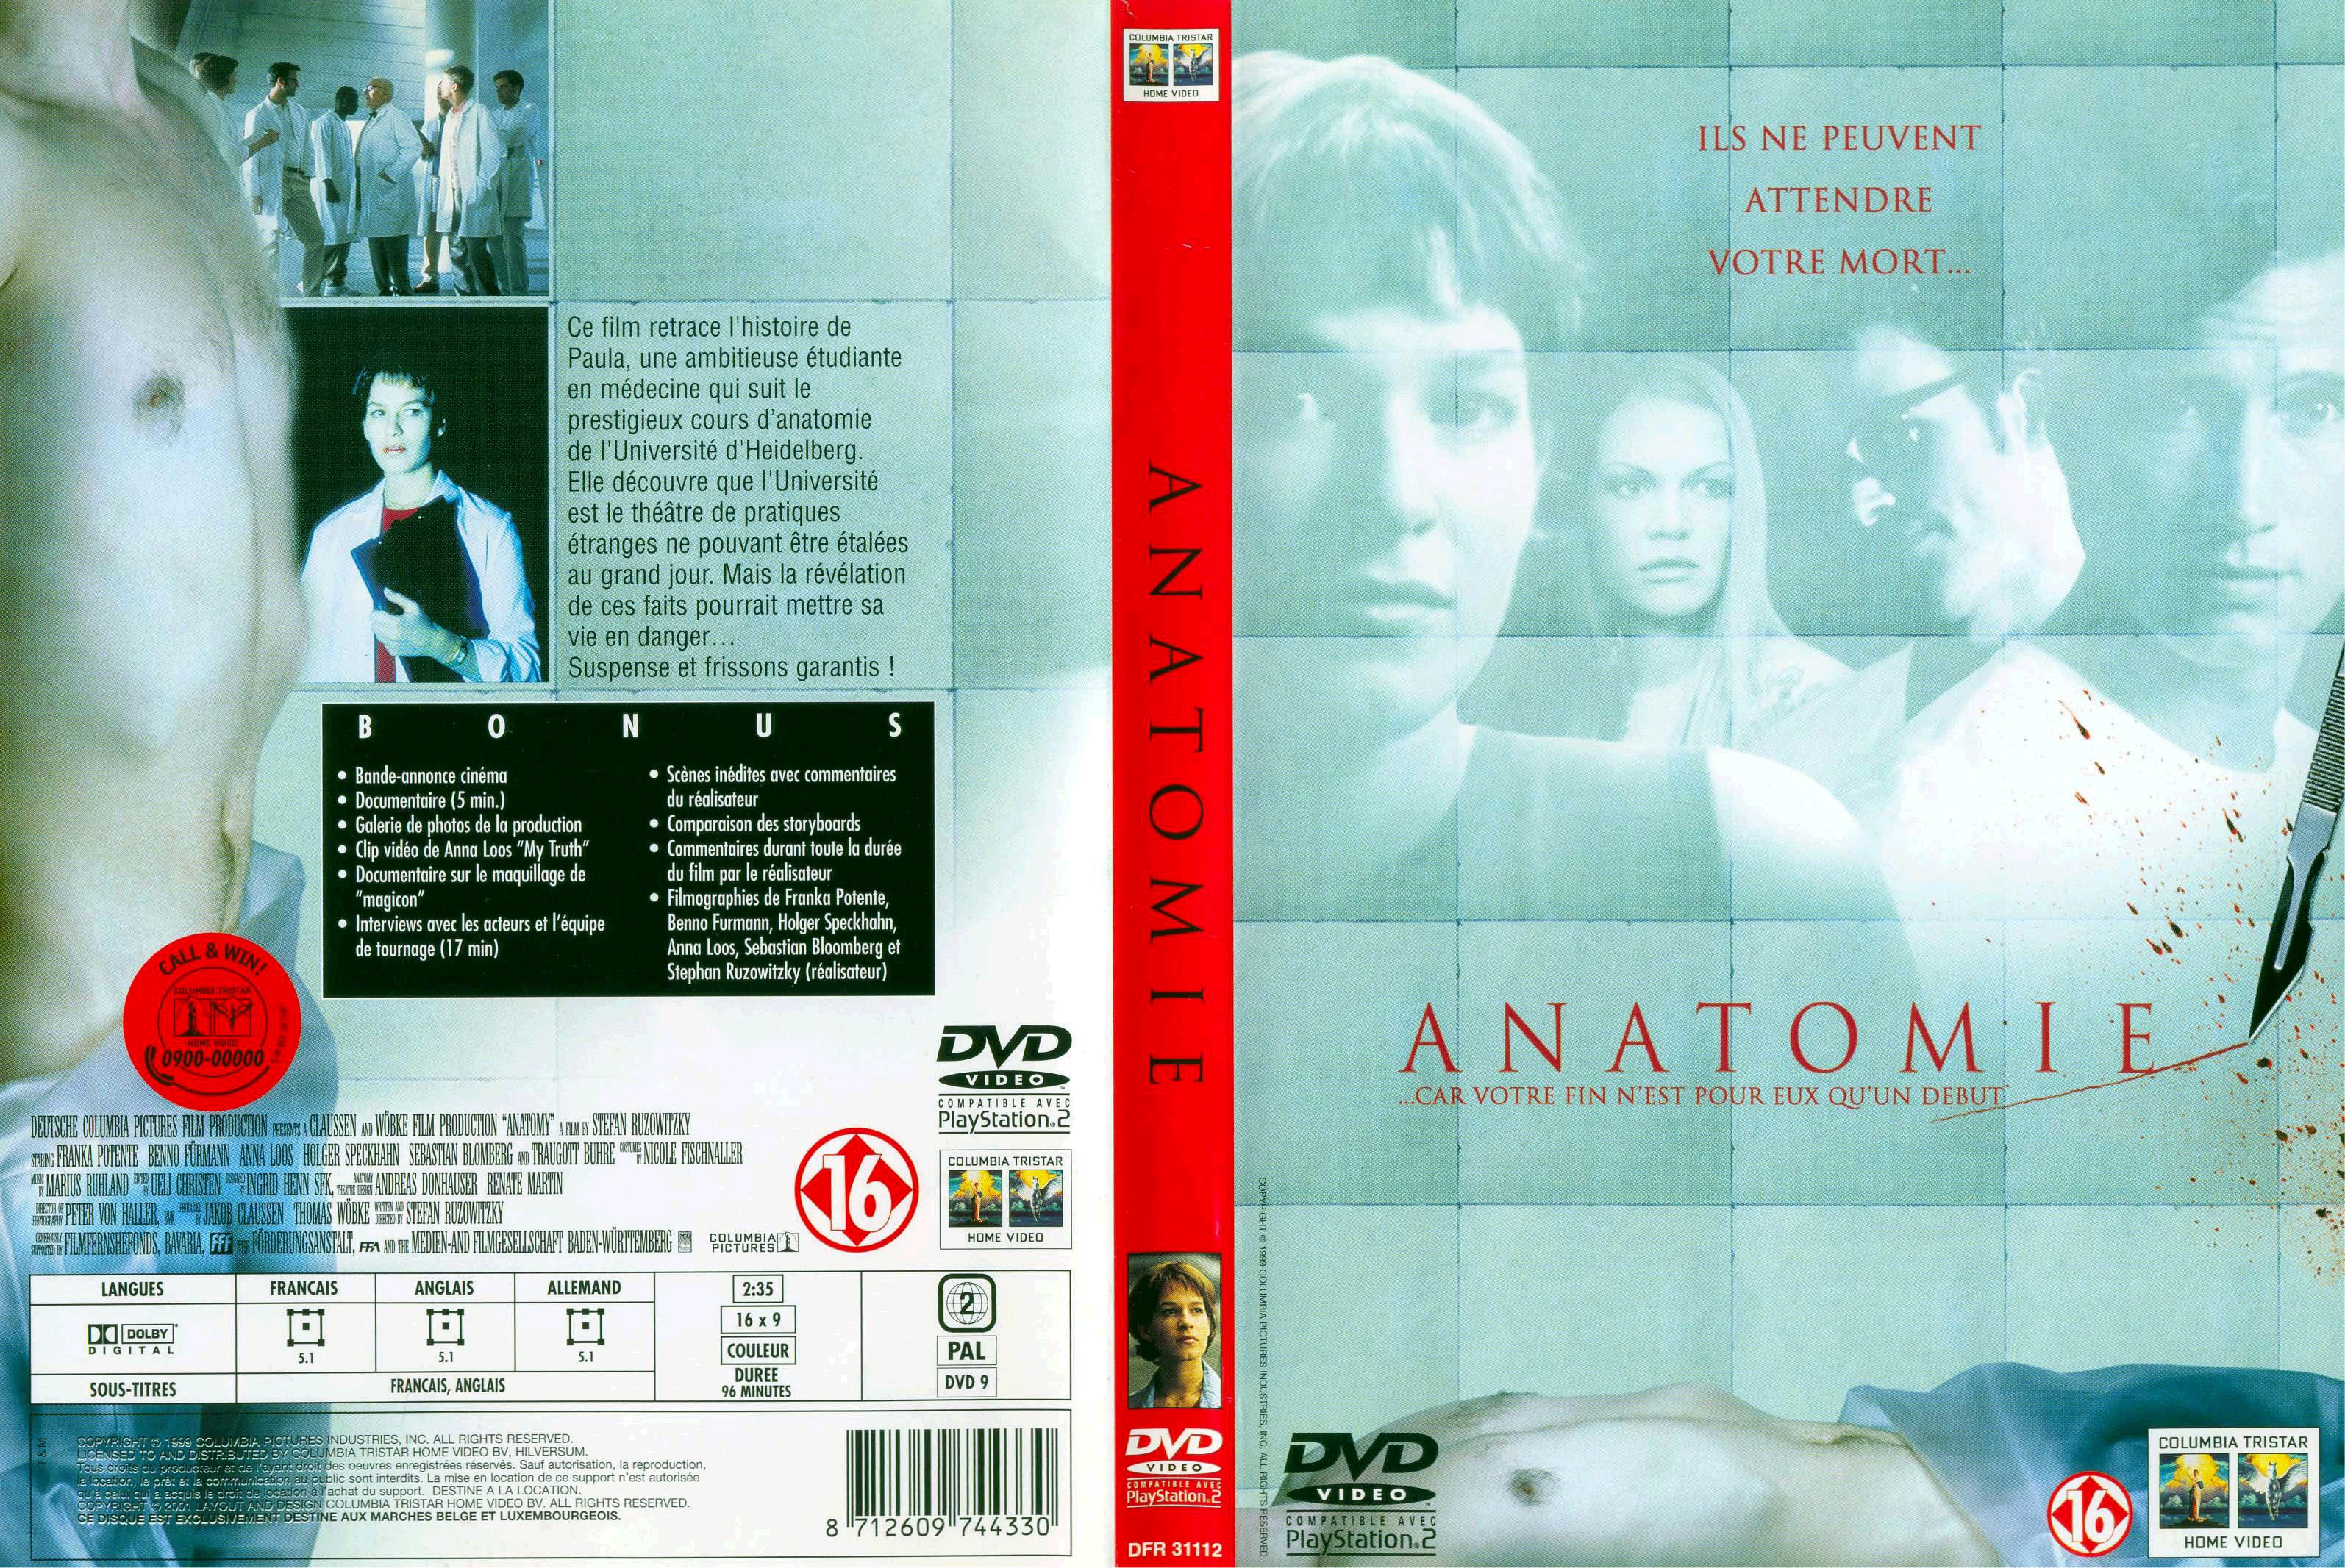 Jaquette DVD Anatomie